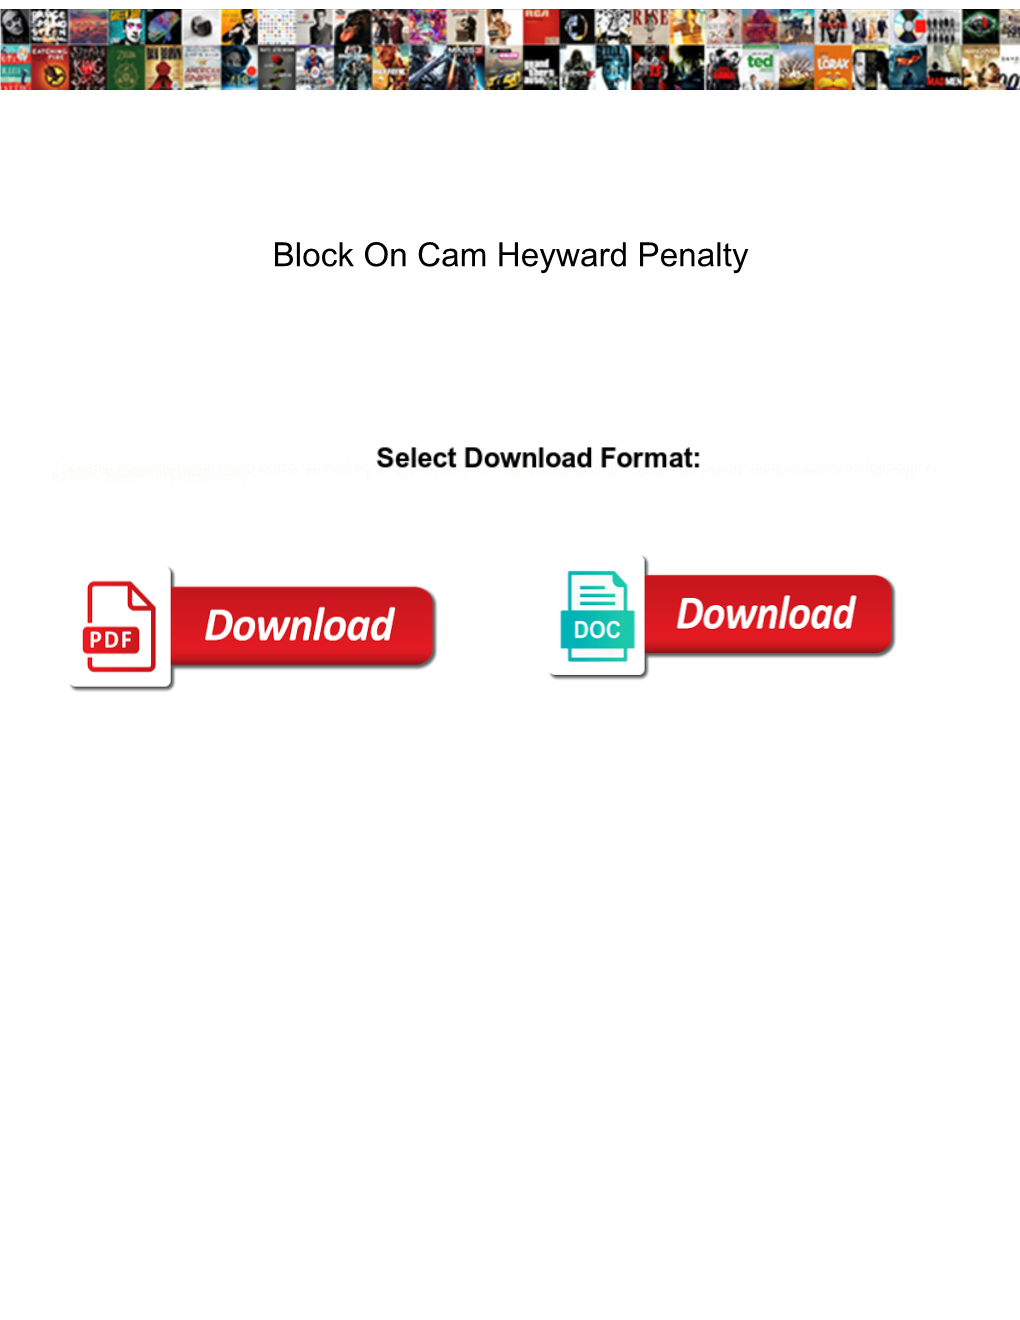 Block on Cam Heyward Penalty